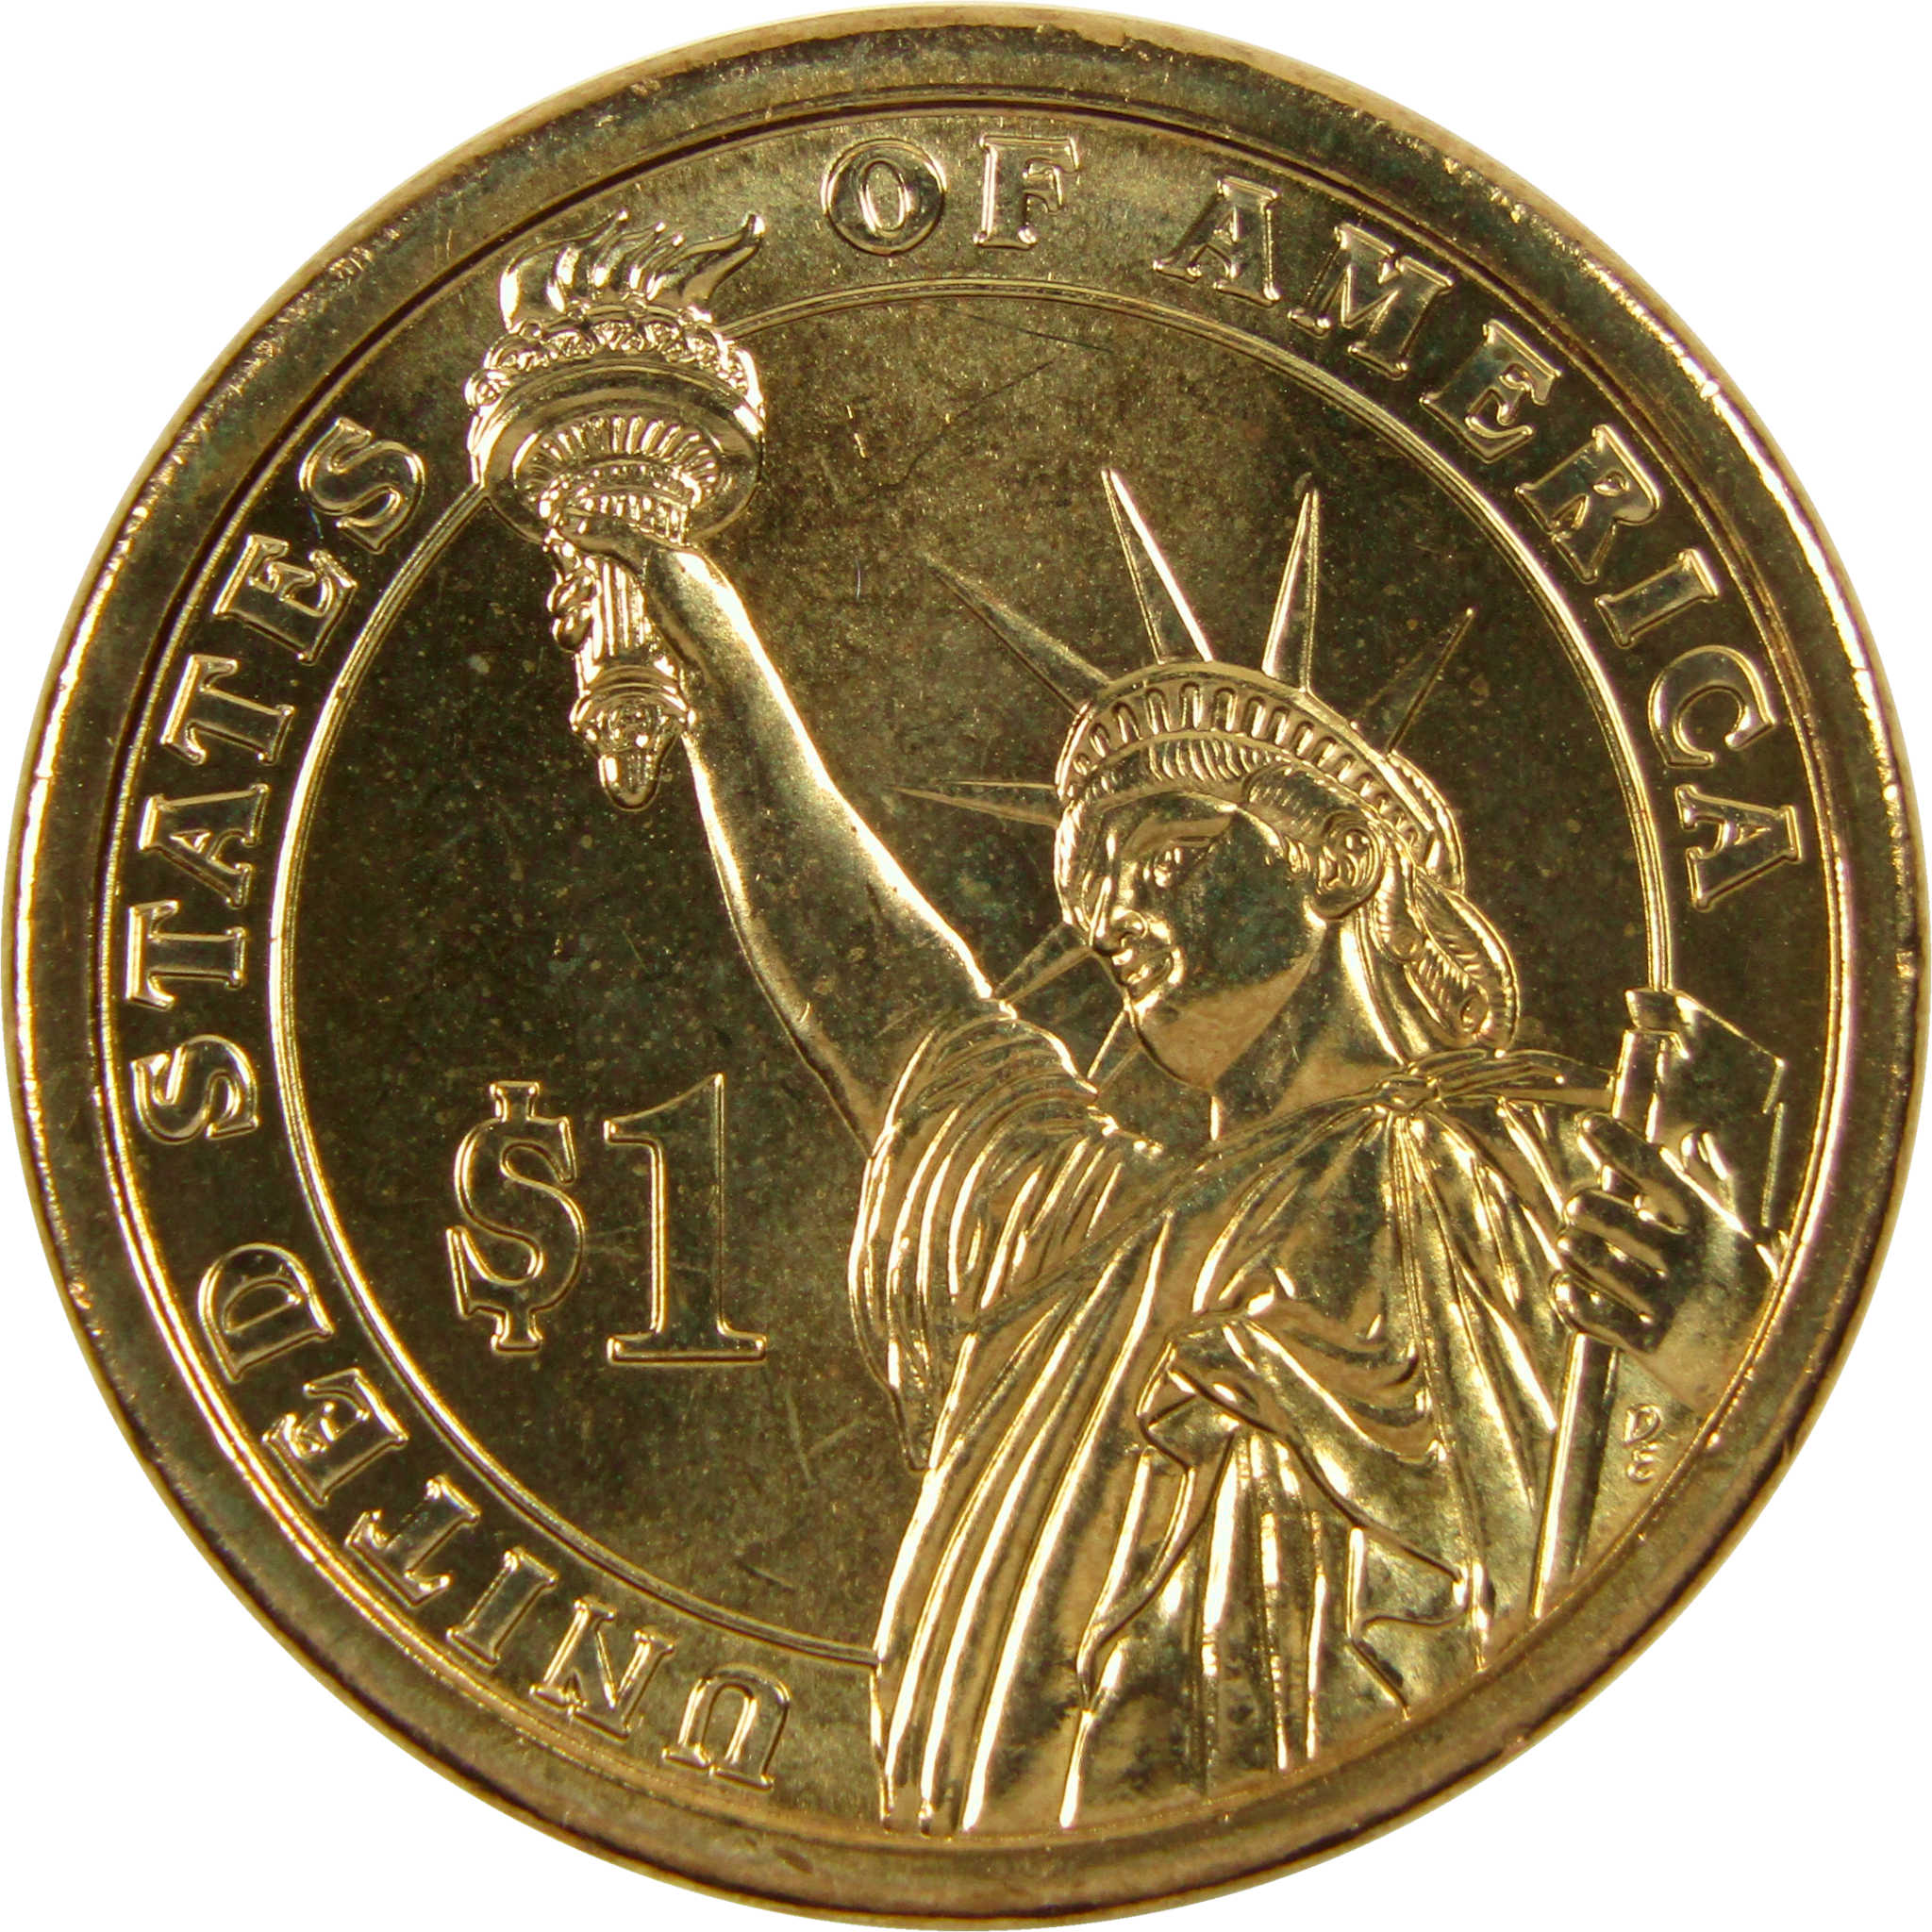 2008 D James Monroe Presidential Dollar BU Uncirculated $1 Coin